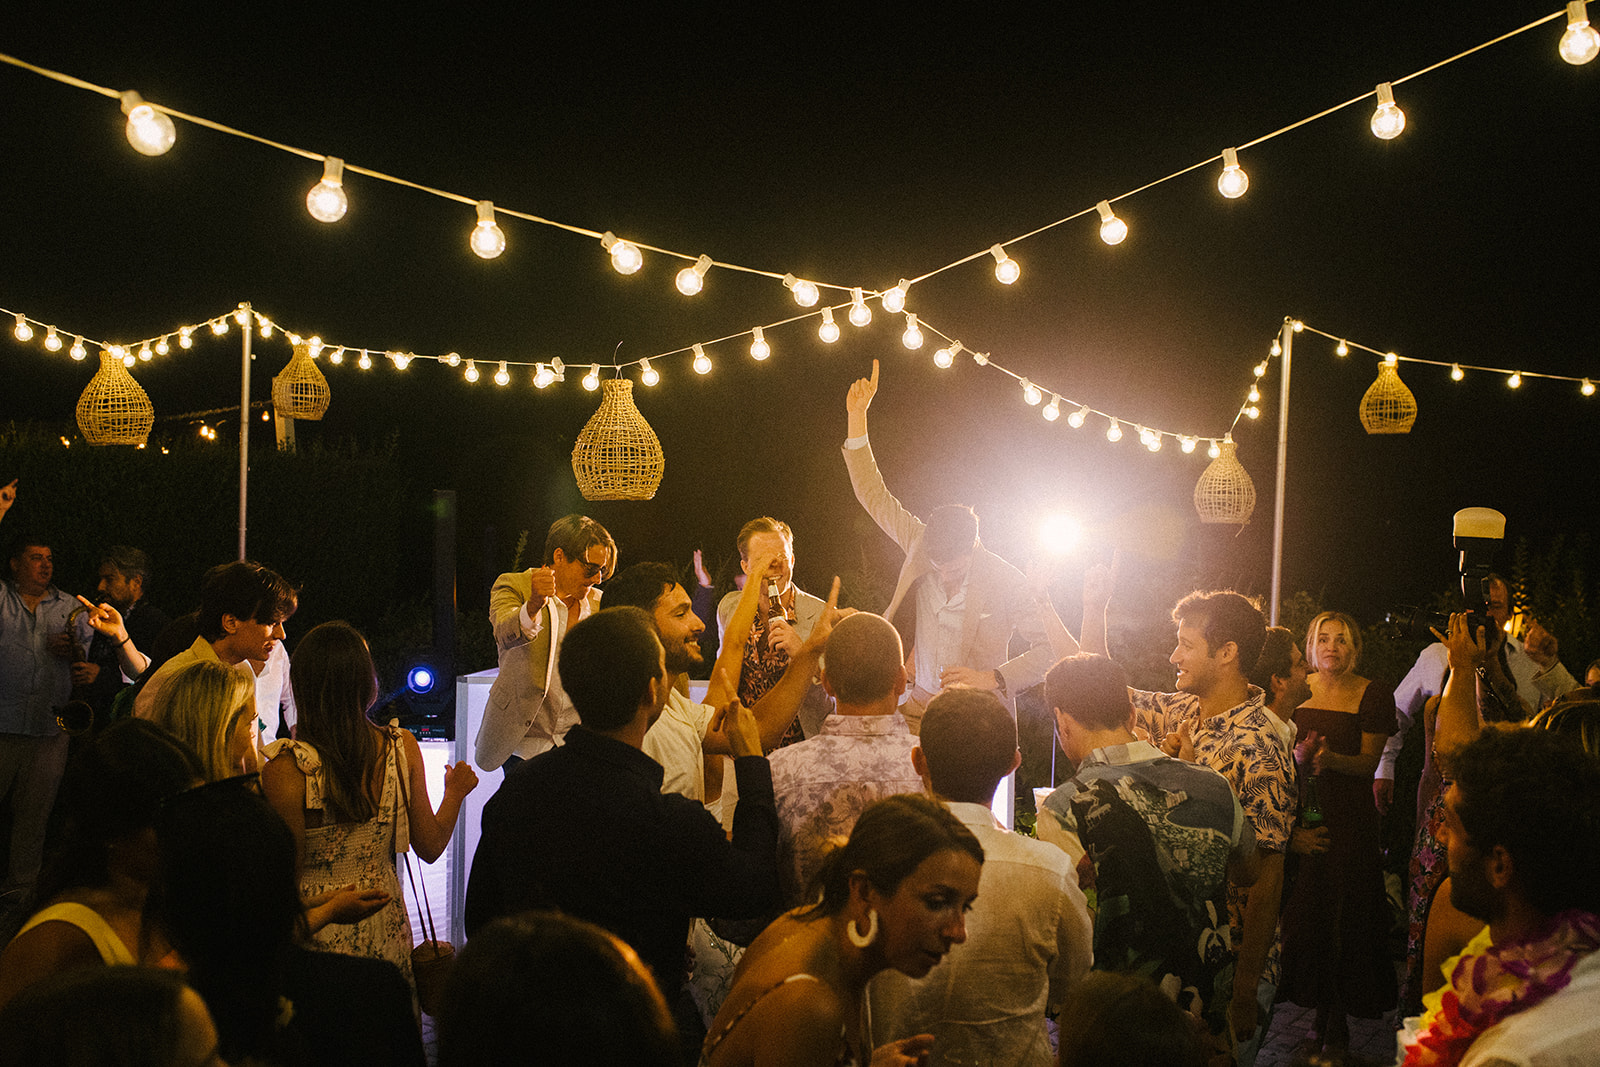 Epic Dance moves pictures
Wedding photographer Hamptons New York